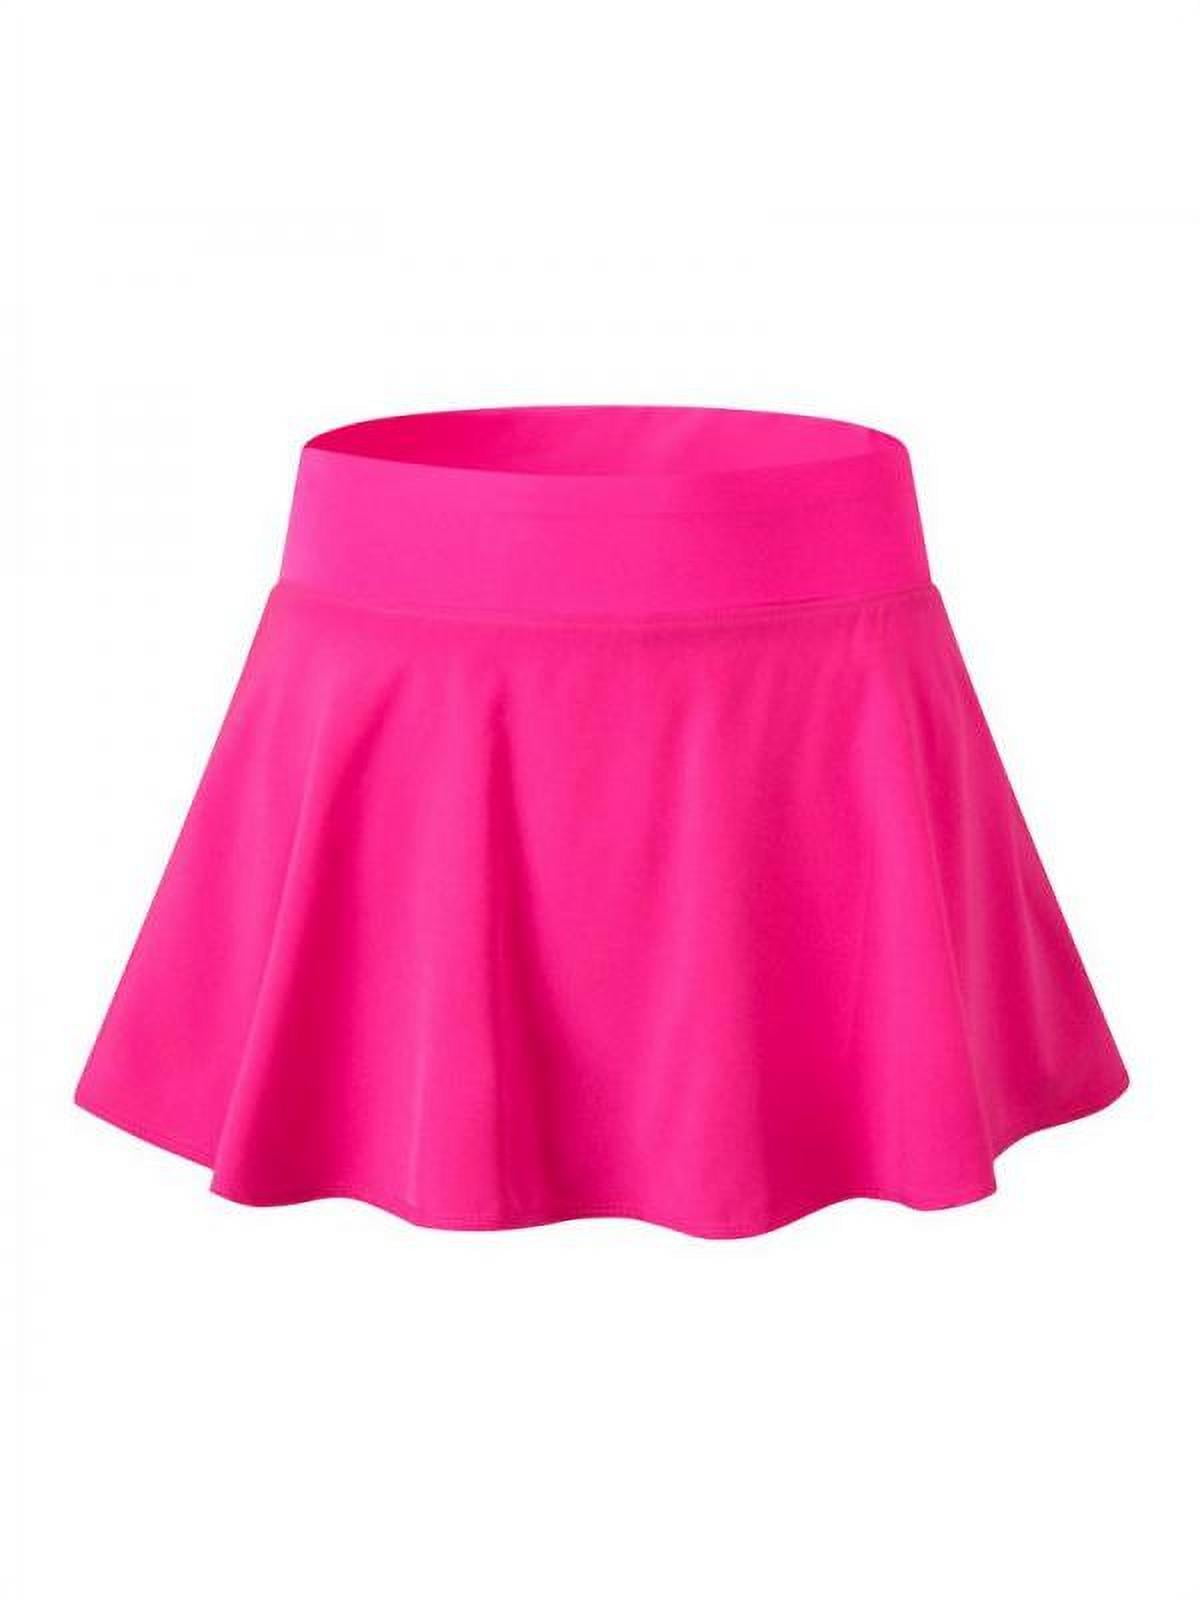 Zupora Tennis Skorts for Women Golf Skirts with Pockets Athletic Sports  Running Active - Walmart.com